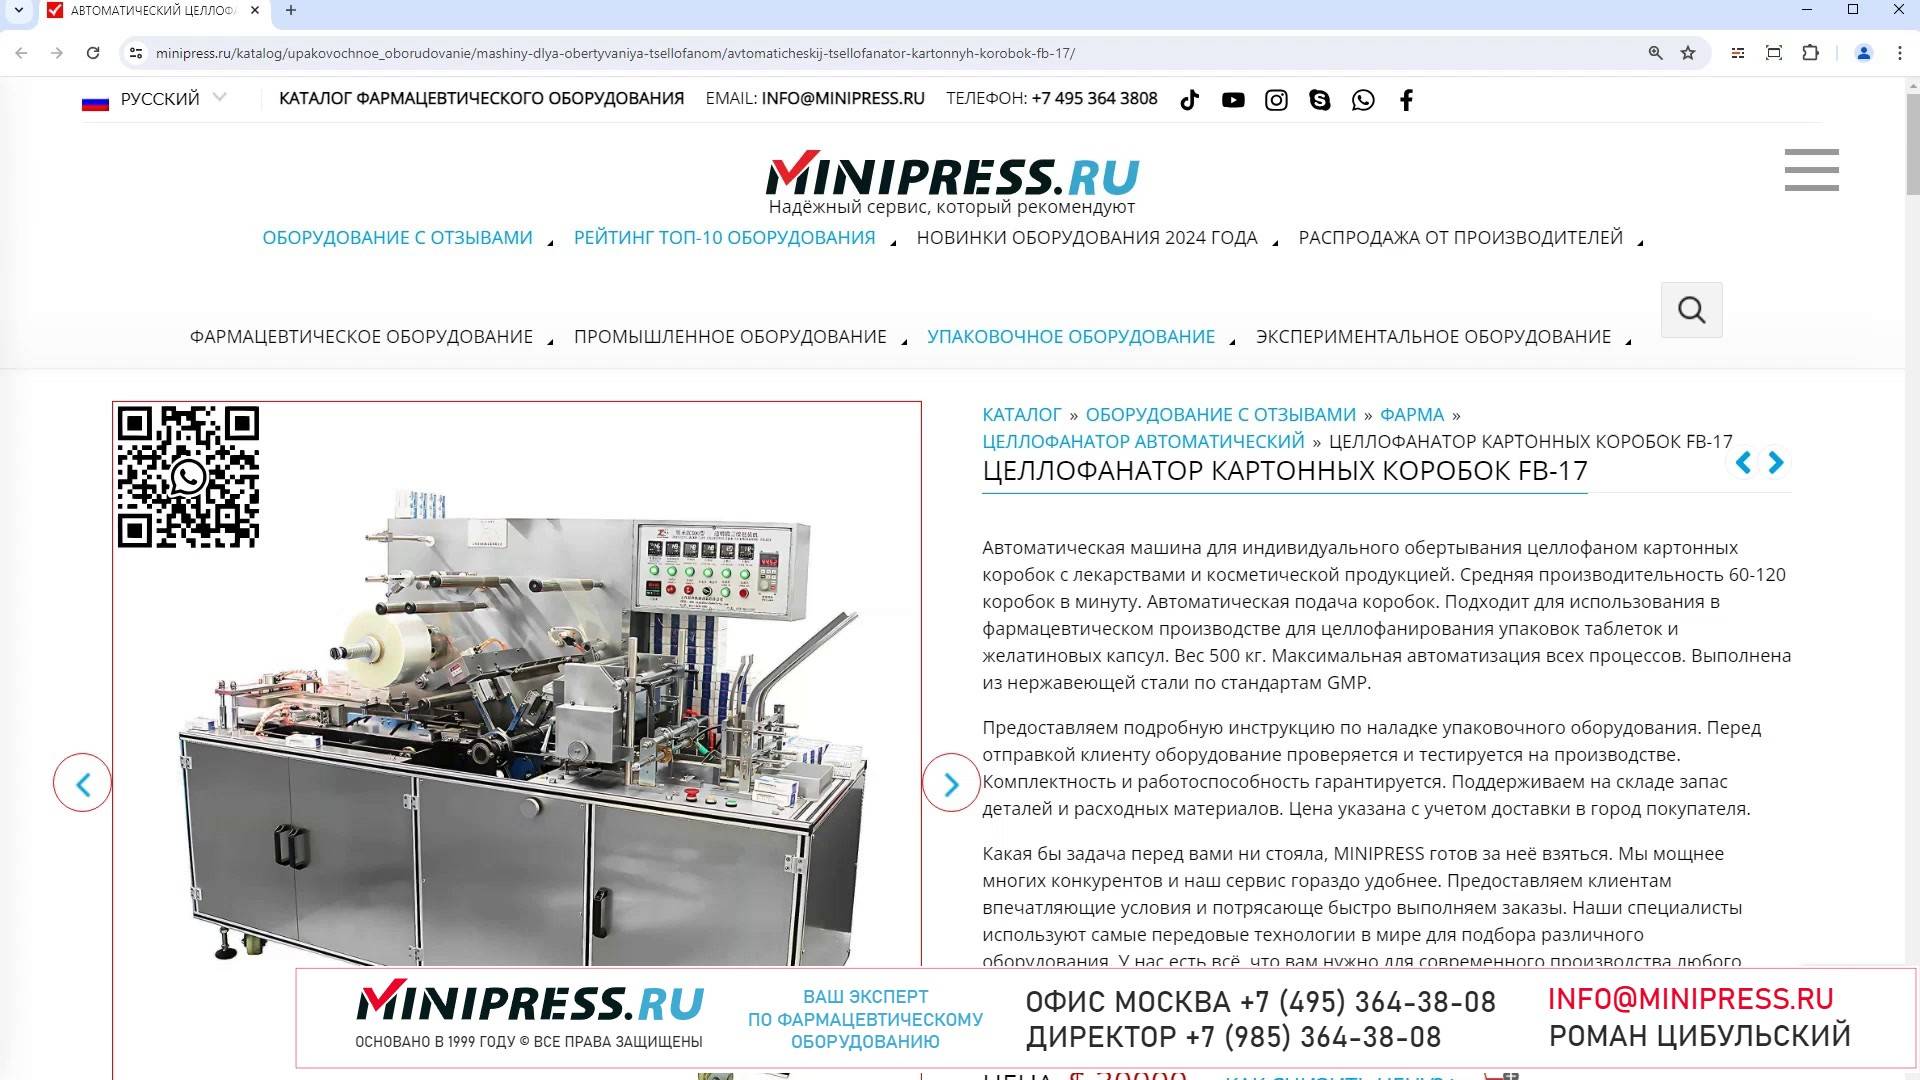 Minipress.ru Целлофанатор картонных коробок FB-17